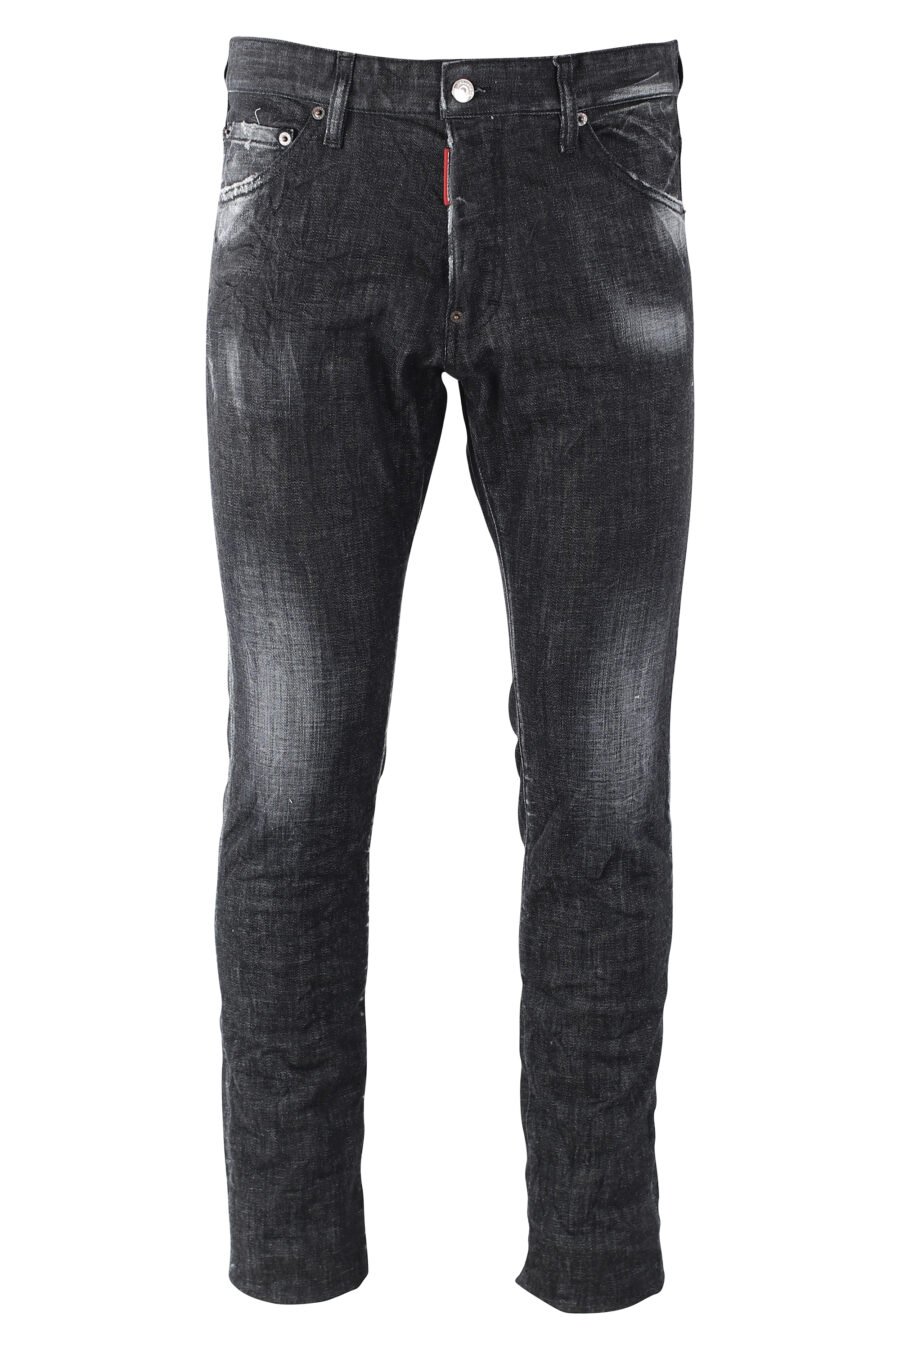 Coole Jeanshose schwarz semi-getragen - IMG 9699